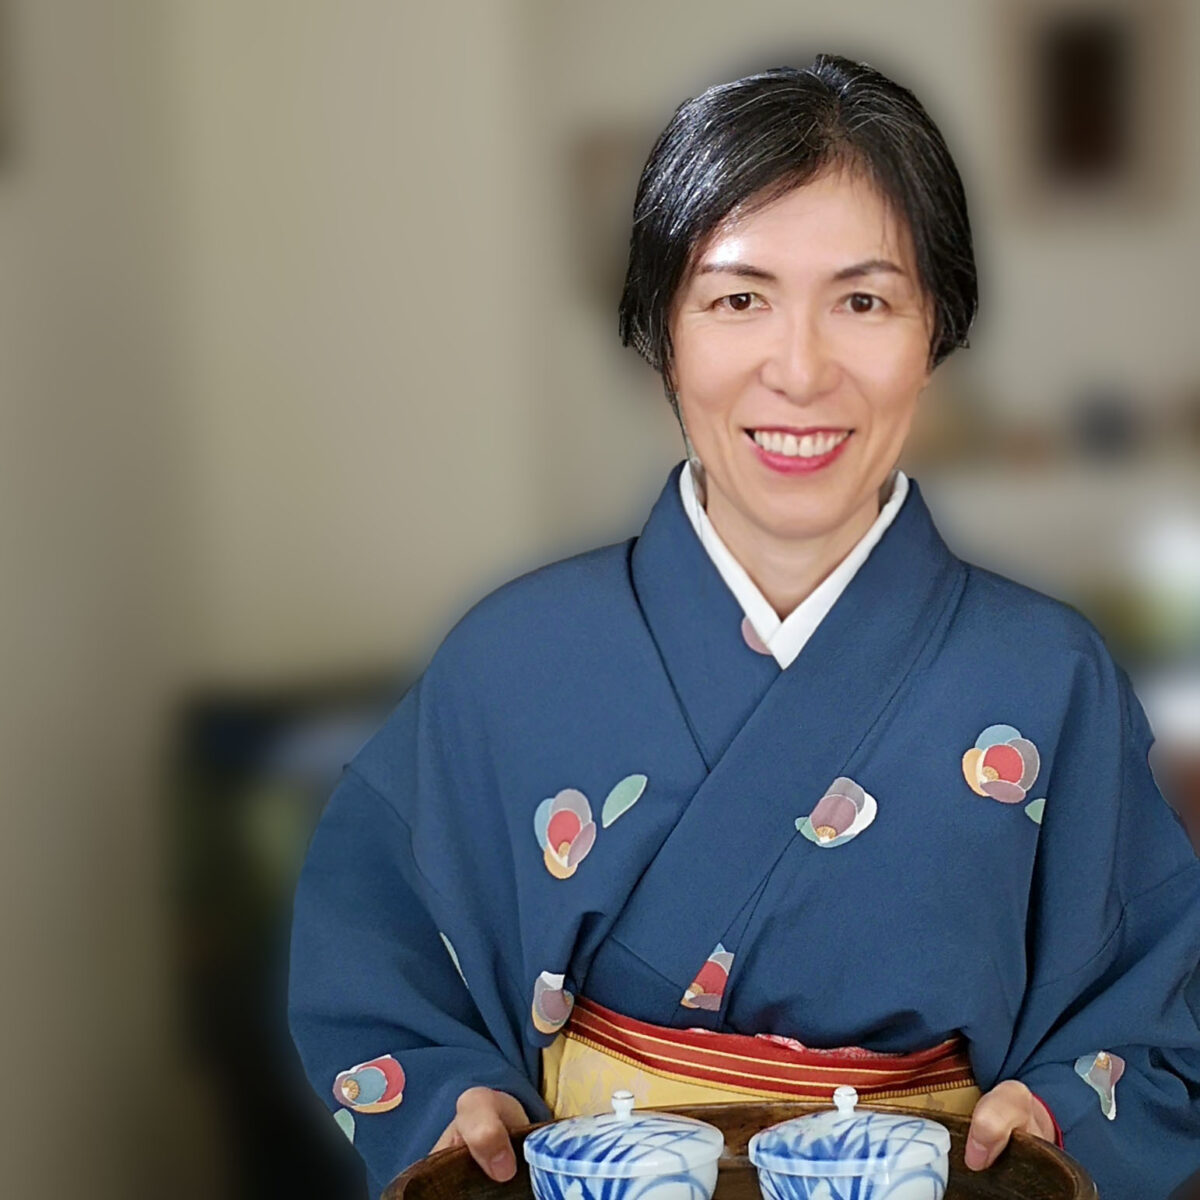 Japanese woman in kimono